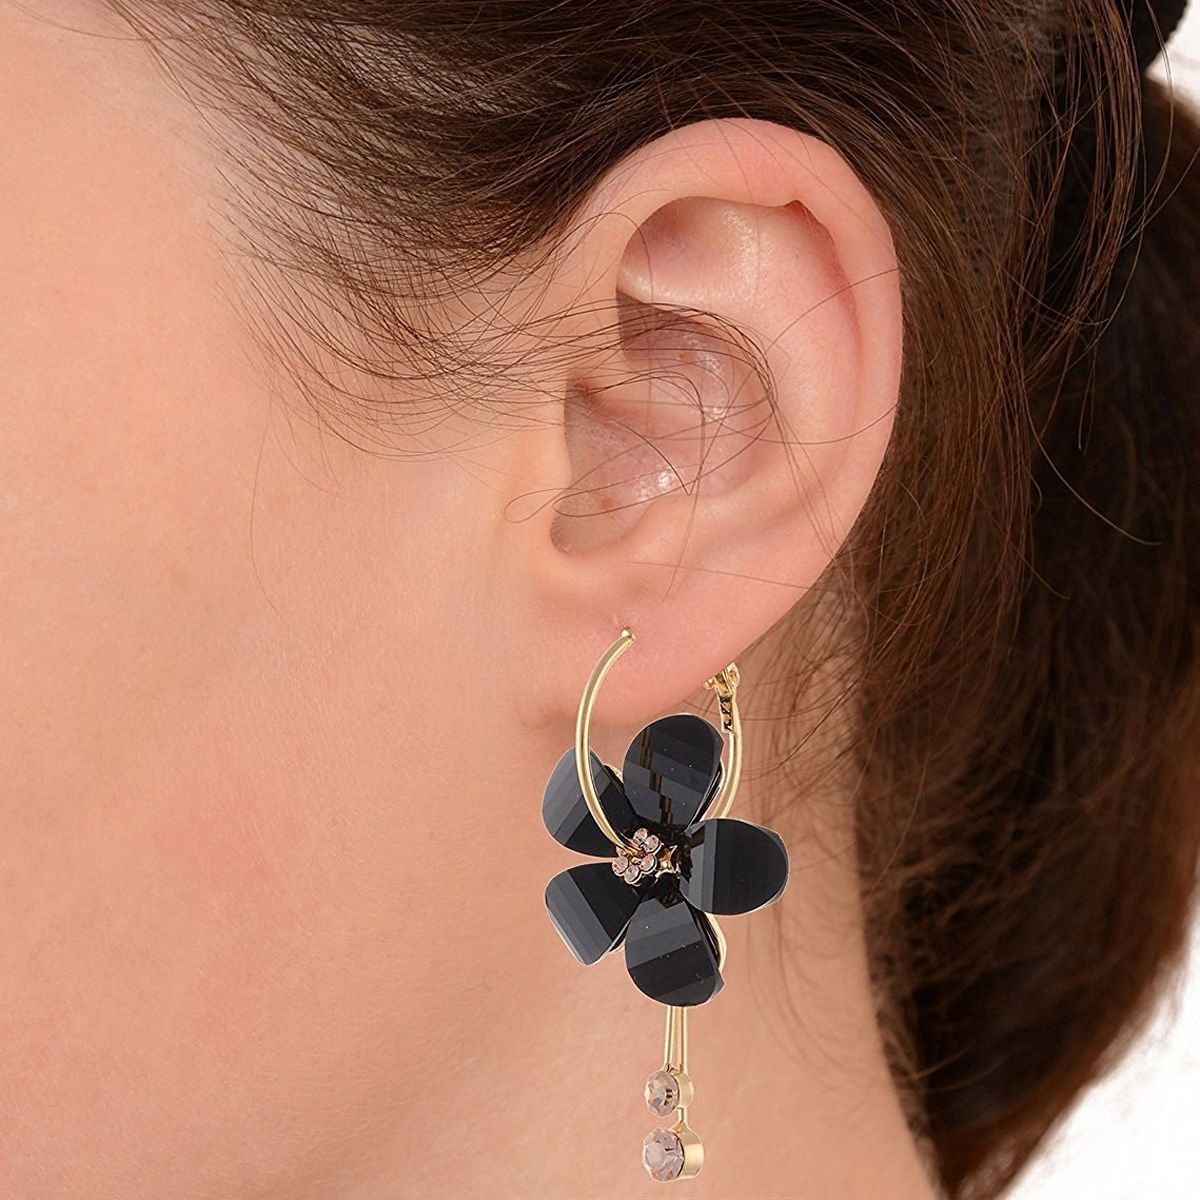 Wholesale Sexy Woman Black Flower Earrings Party Club Accessories Ear Stud  Earrings Fashion Jewelry Small Resin Korean Pearl Stud Earrings From  malibabacom